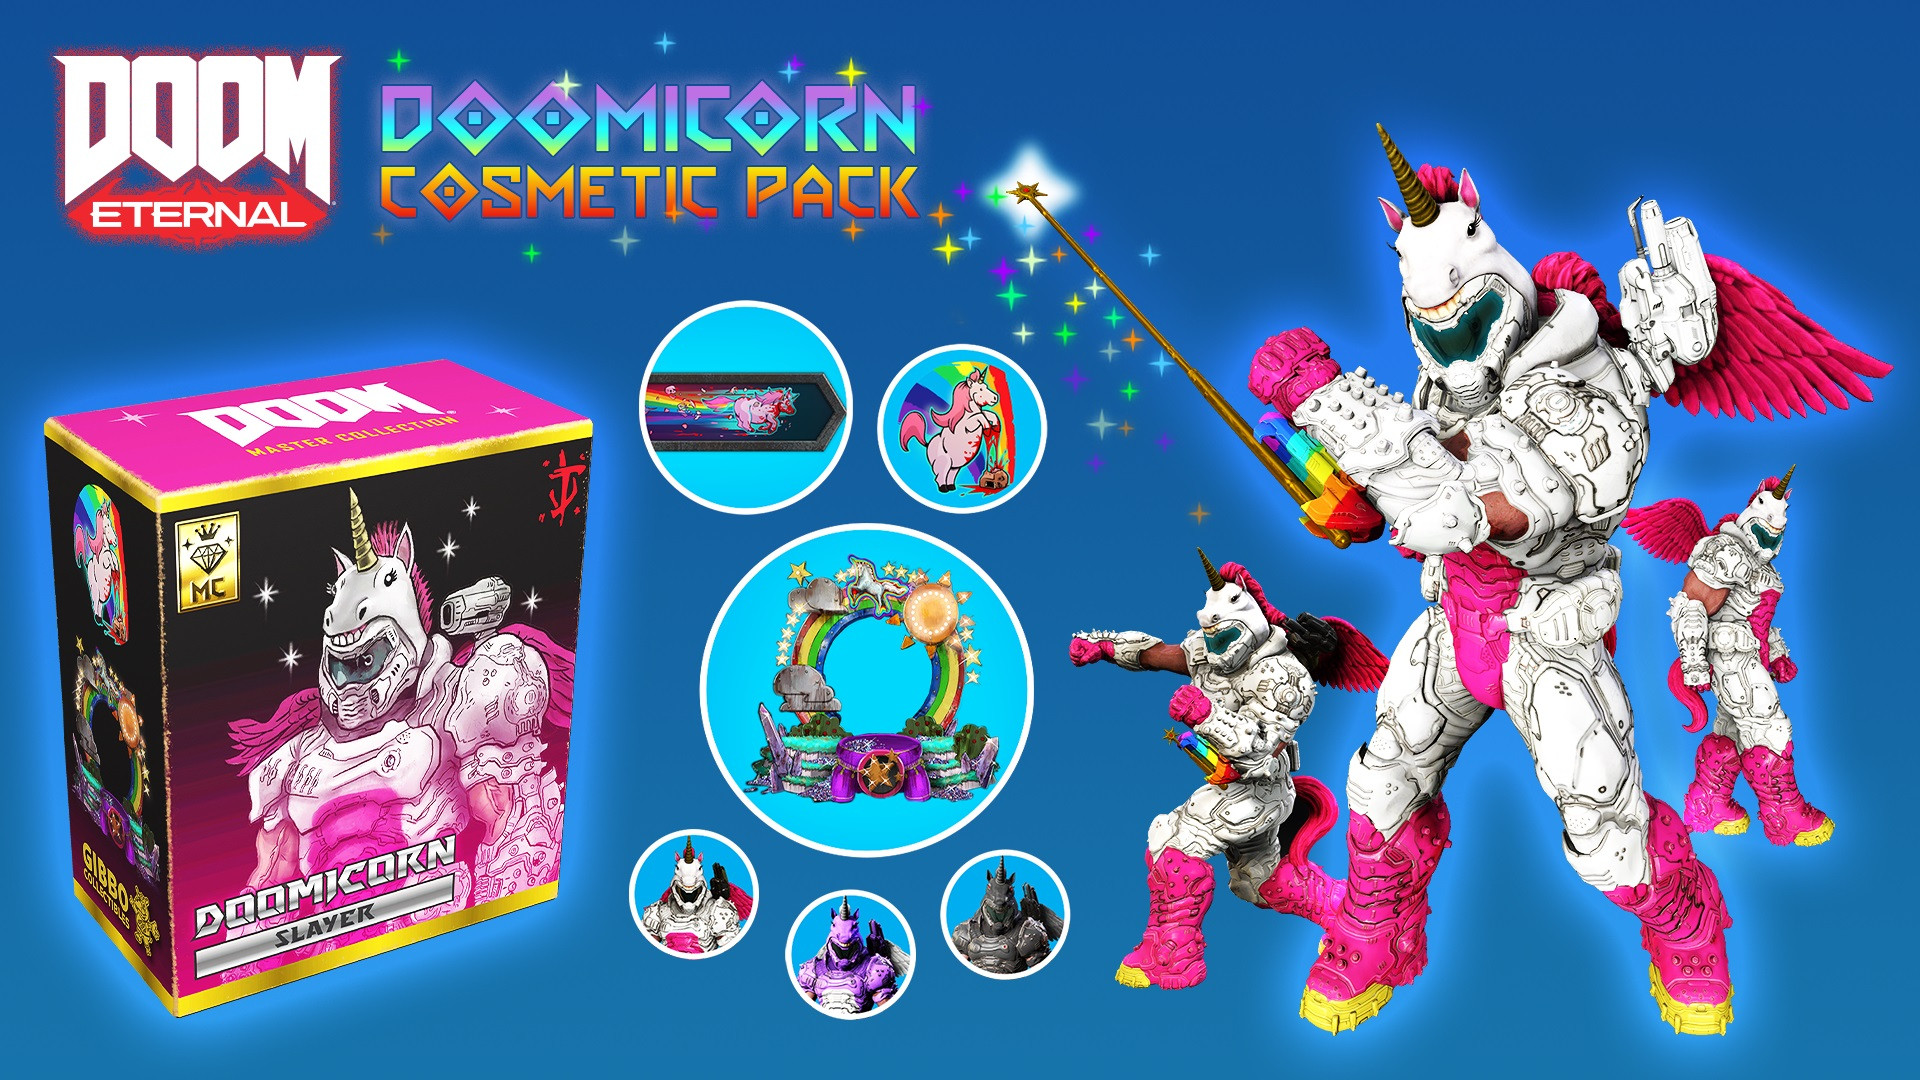 Nintendo AOC DOOM Eternal: DOOMicorn Master Collection Cosmetic Pack DLC (extra content)